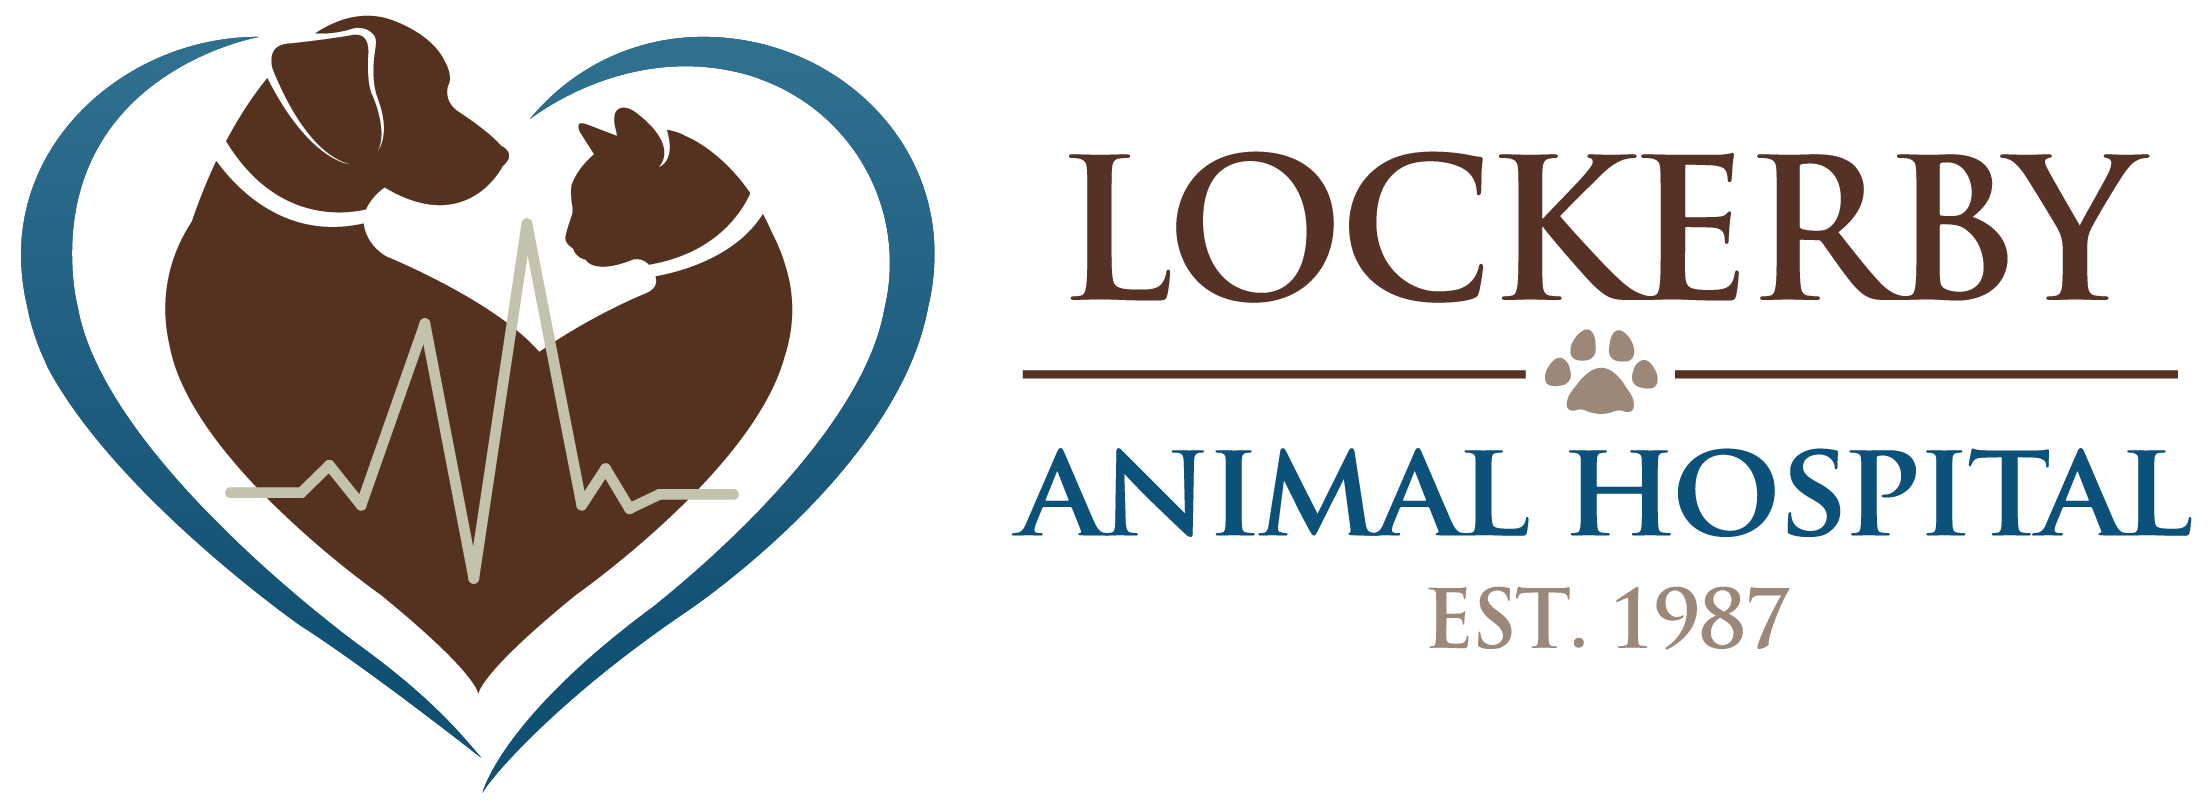 Our Founder - Lockerby Animal Hospital